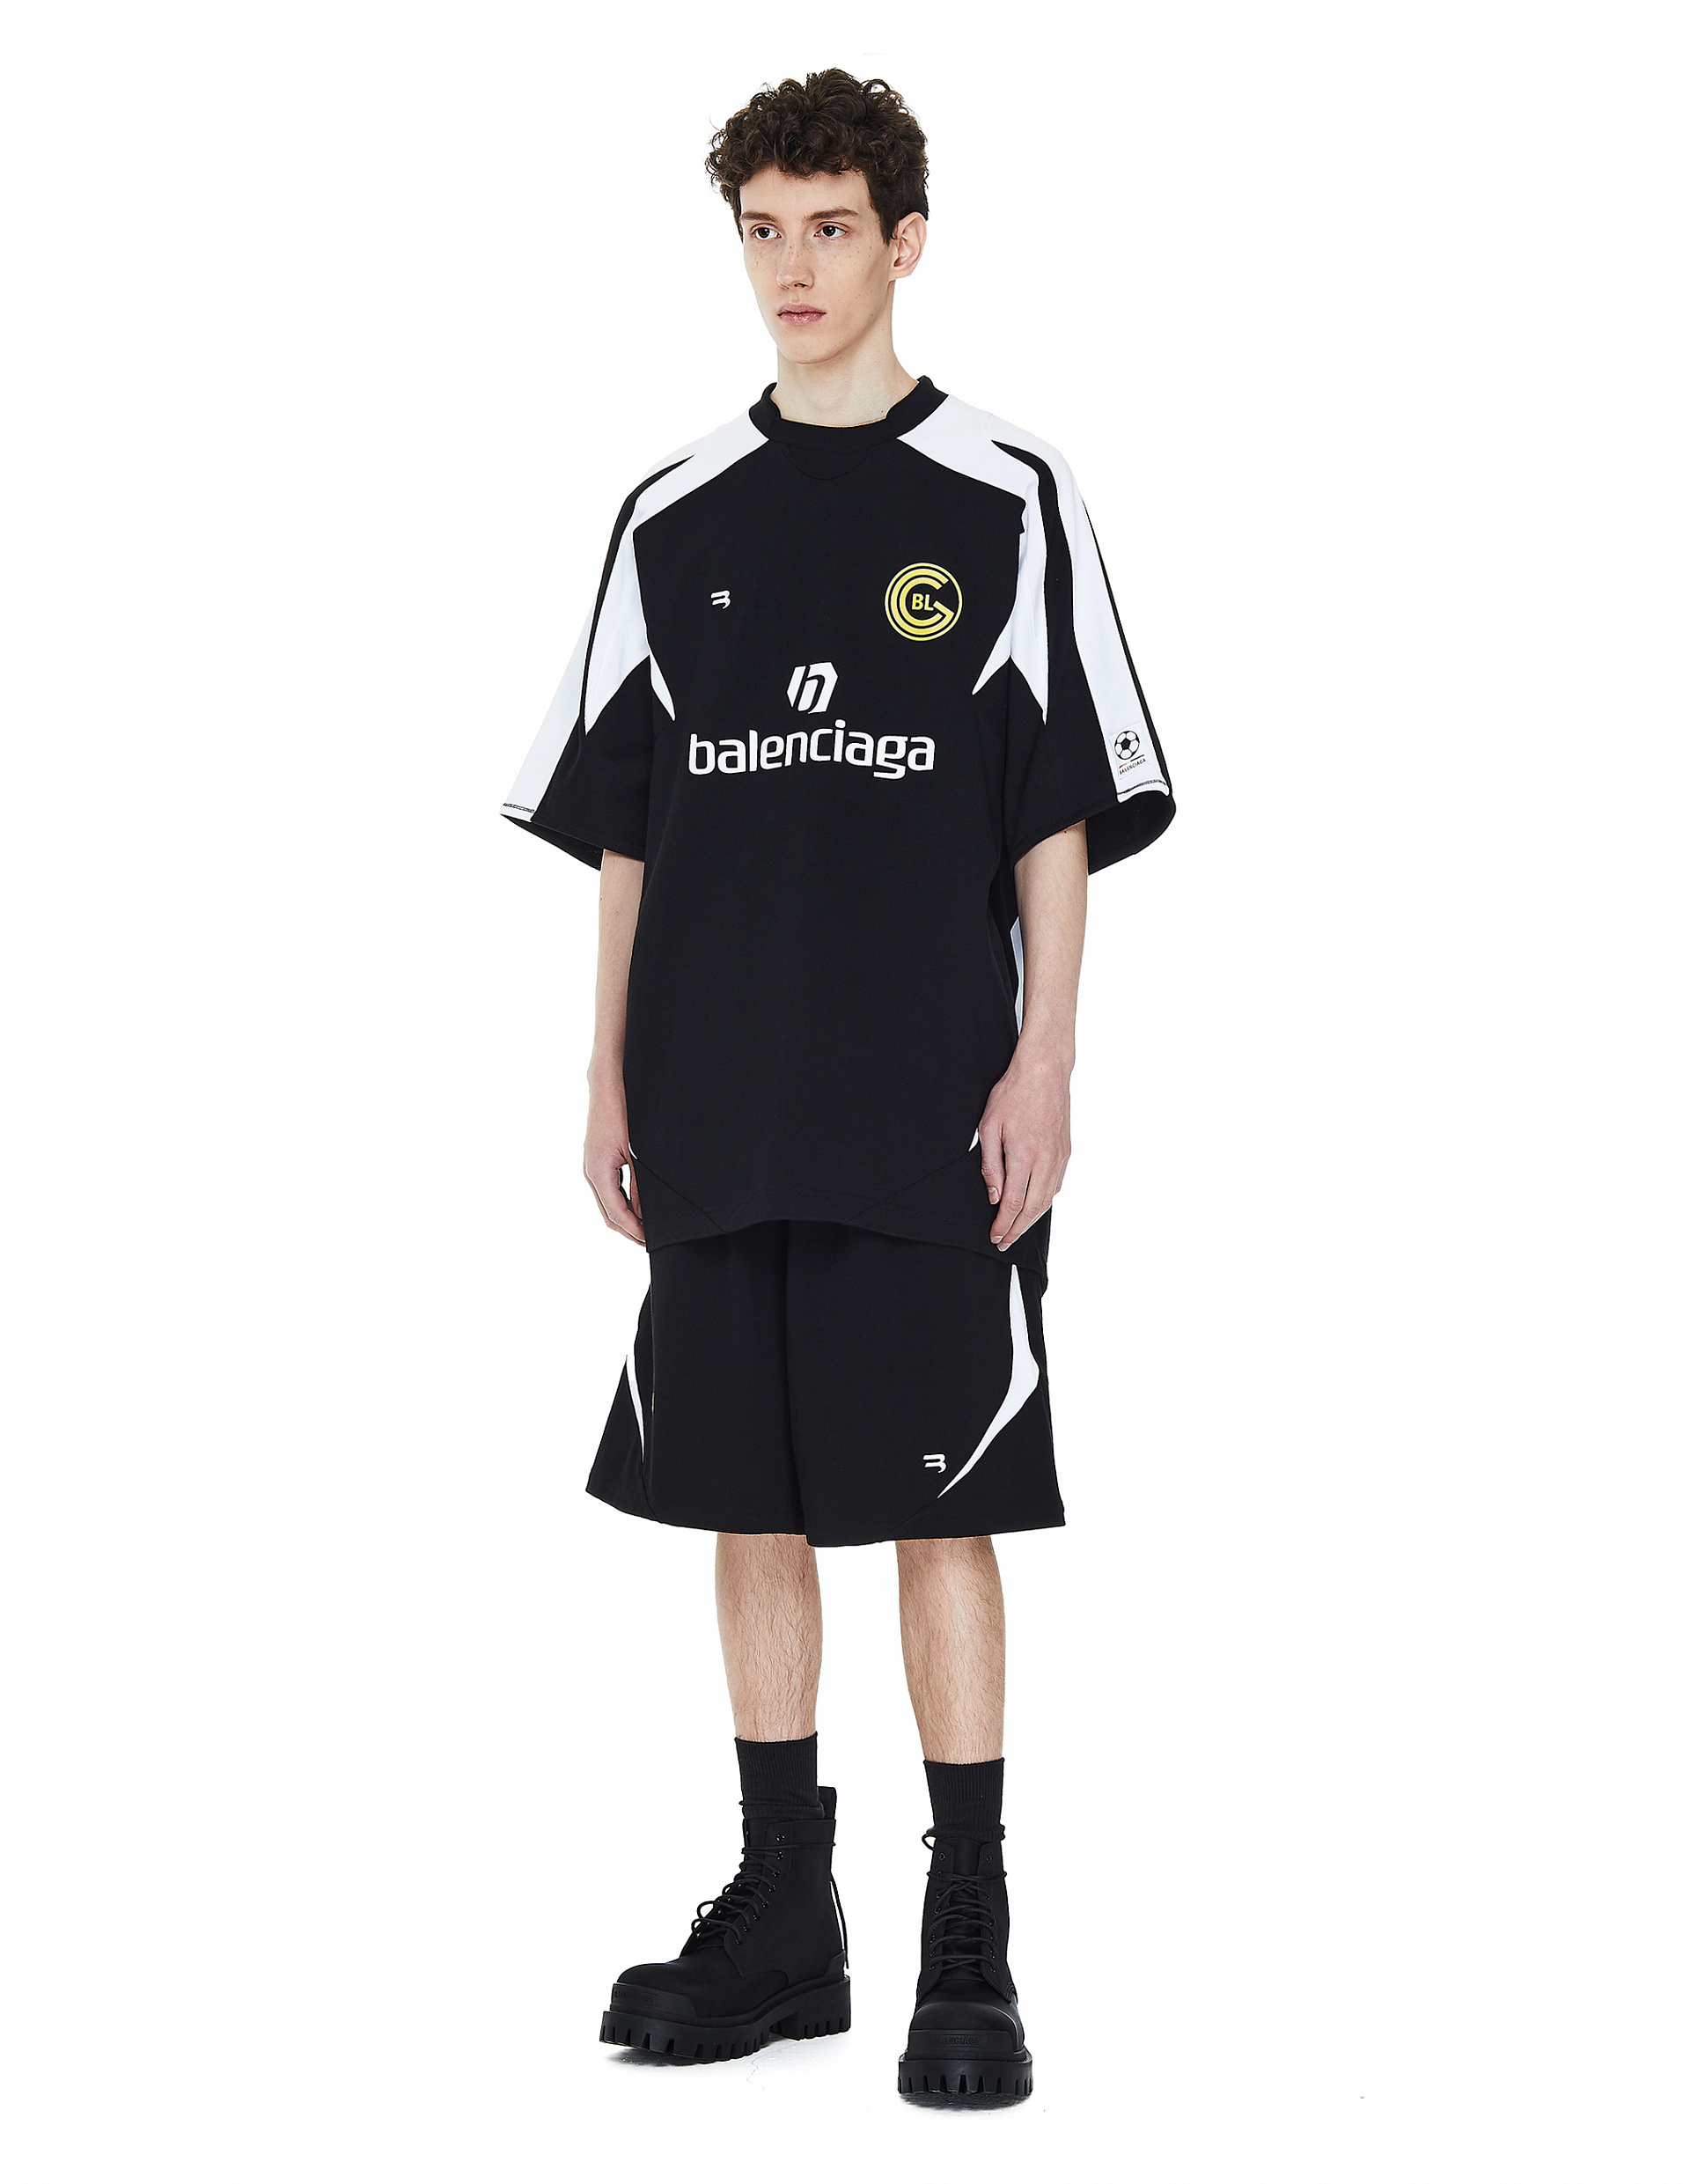 Buy Balenciaga men black jersey logo soccer t-shirt for $498 online on